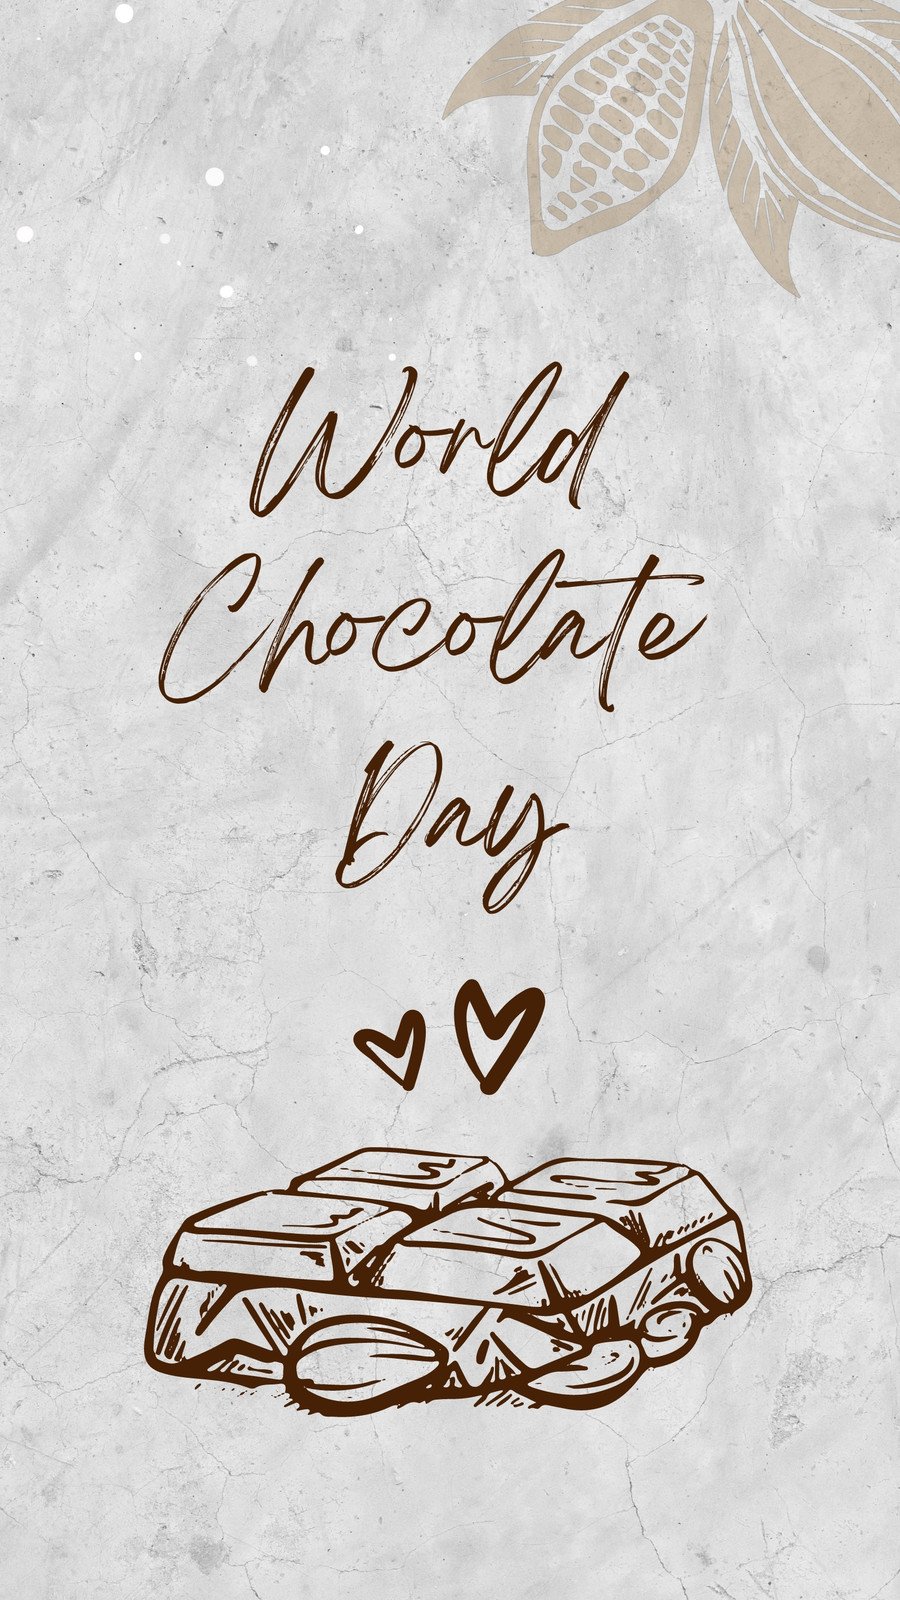 ni_sha_15) on Instagram: “Close ups of chocolate day🍫 #chocolateday  #couple #art #illustration #sketch”